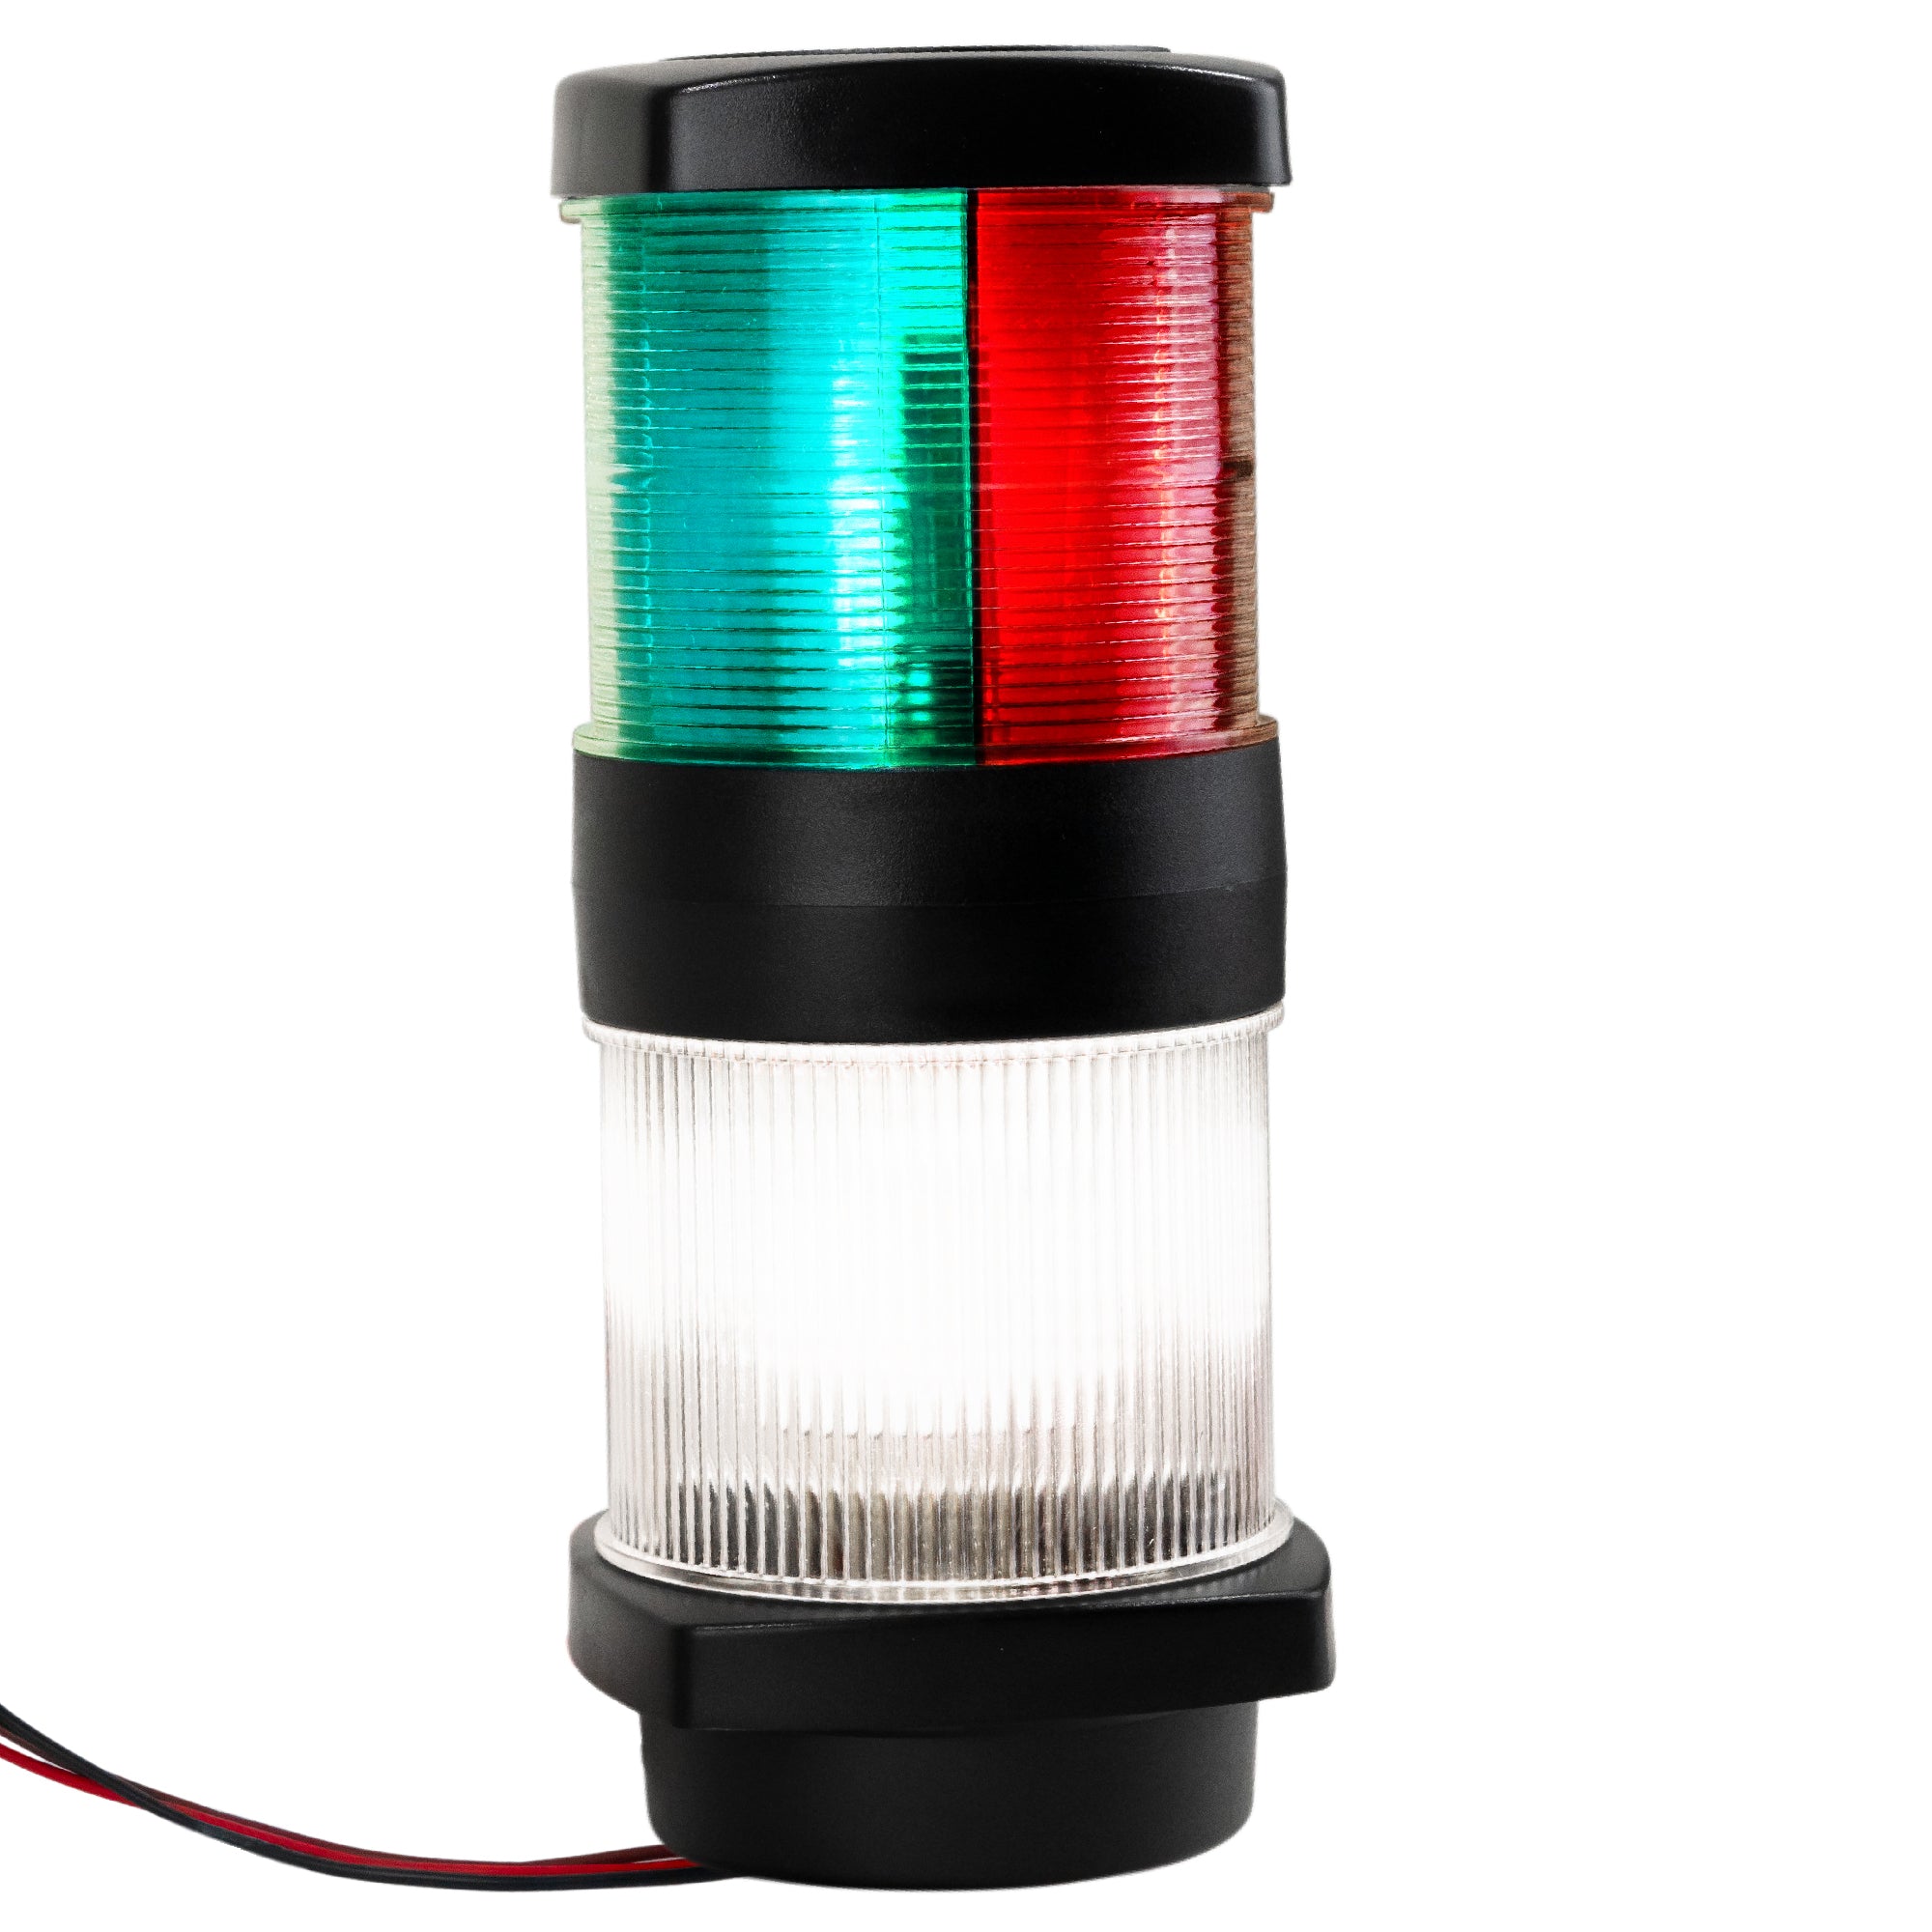 LED Tri-Color Anchor Navigation Light, Vertical Mount, 2 NM - FO4625